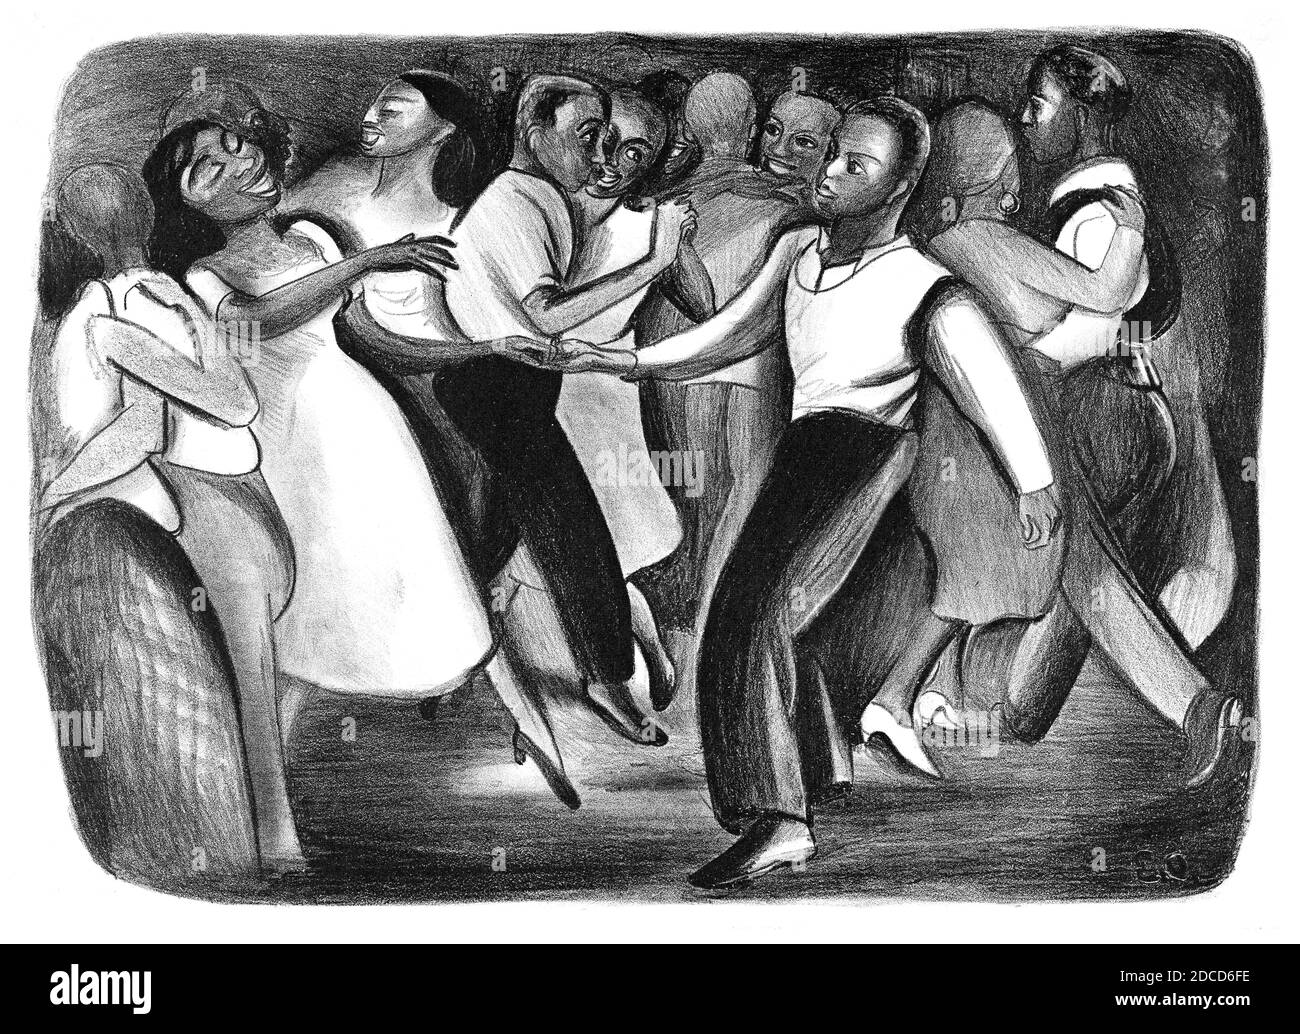 WPA Art, Harlem Street Dance Stock Photo